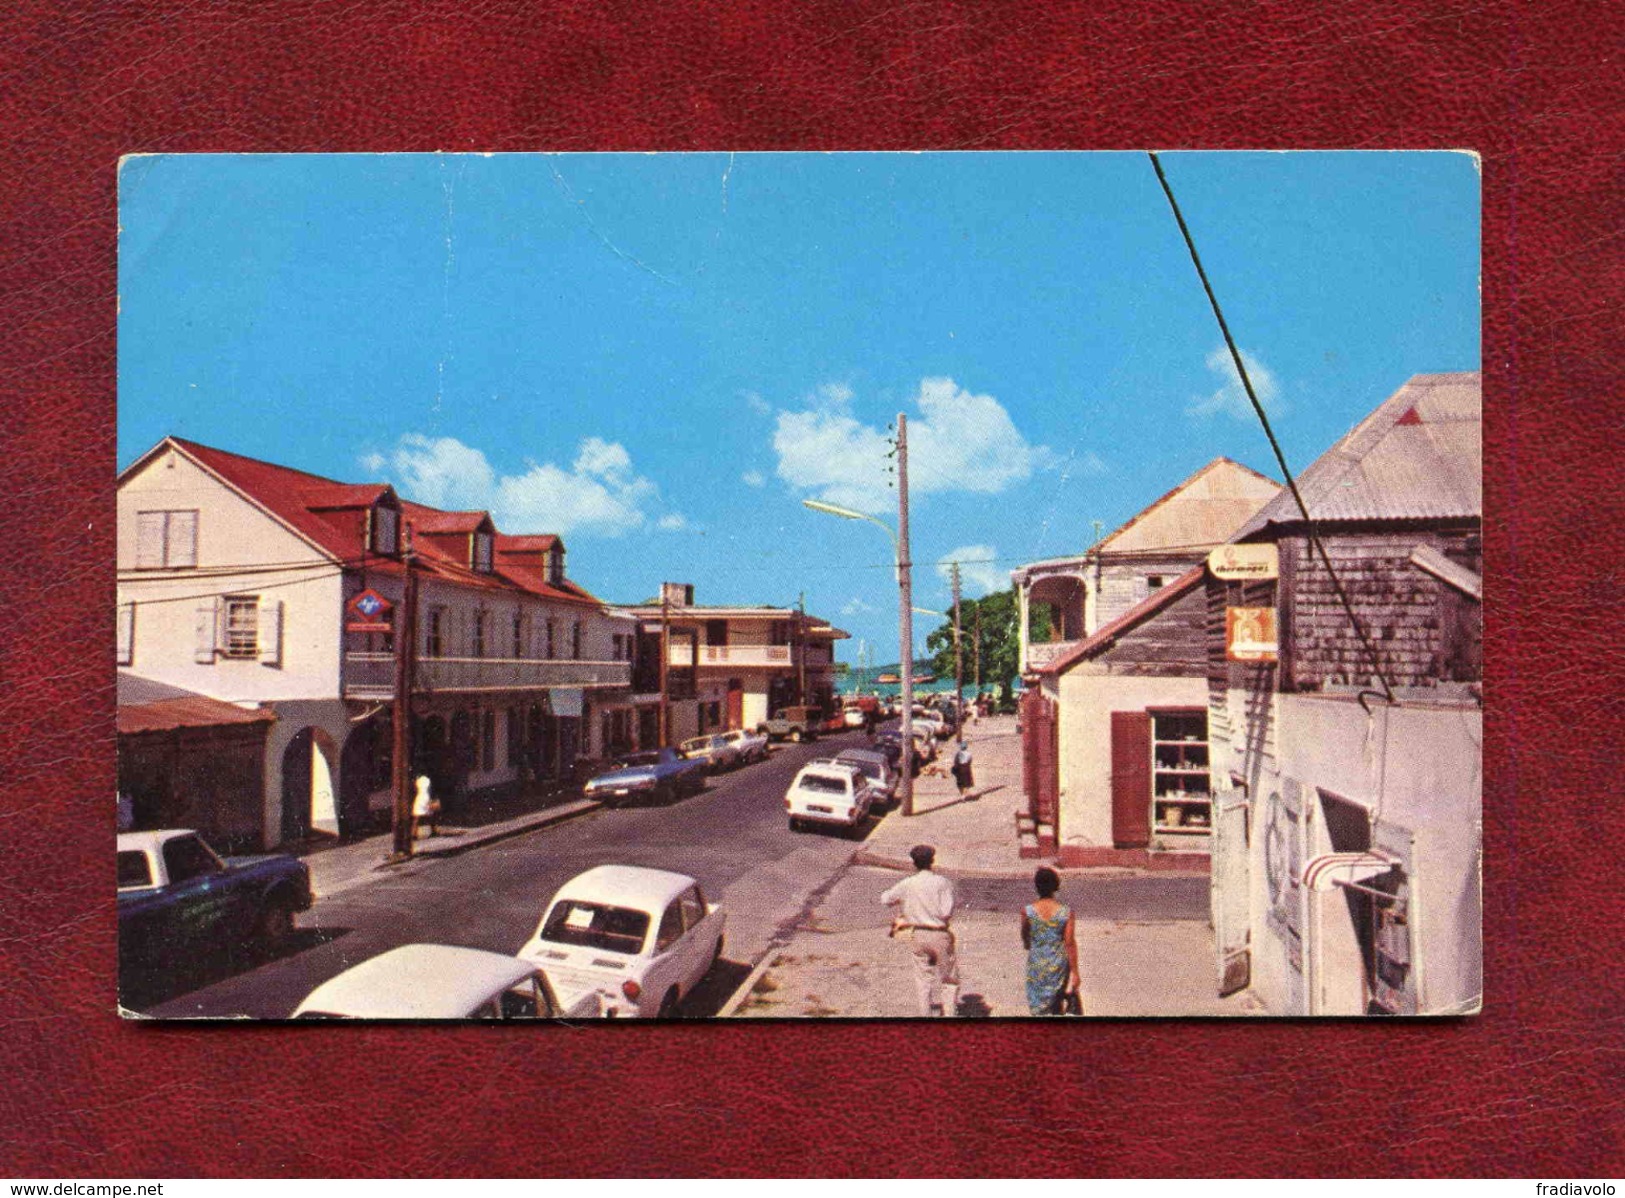 Nederlandse Antillen - Antilles Néerlandaises - Saint-Martin - Marigot Shopping District - Rue De Goubeyre - Saint-Martin